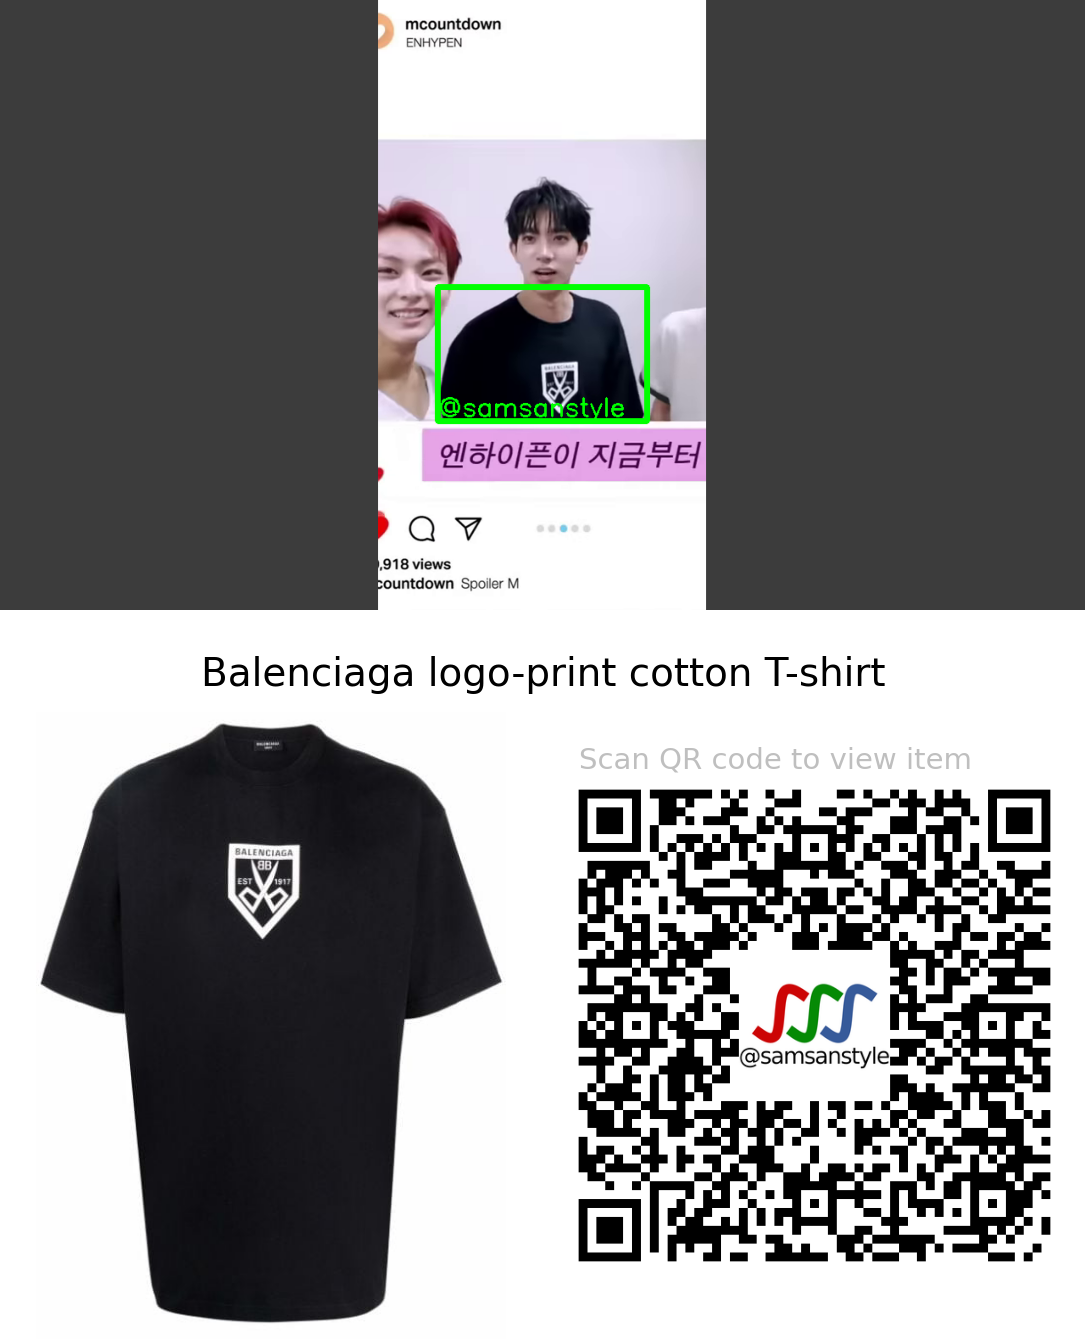 ENHYPEN Heeseung | ‘SPOILER M’ Mnet M Countdown | Balenciaga logo-print cotton T-shirt